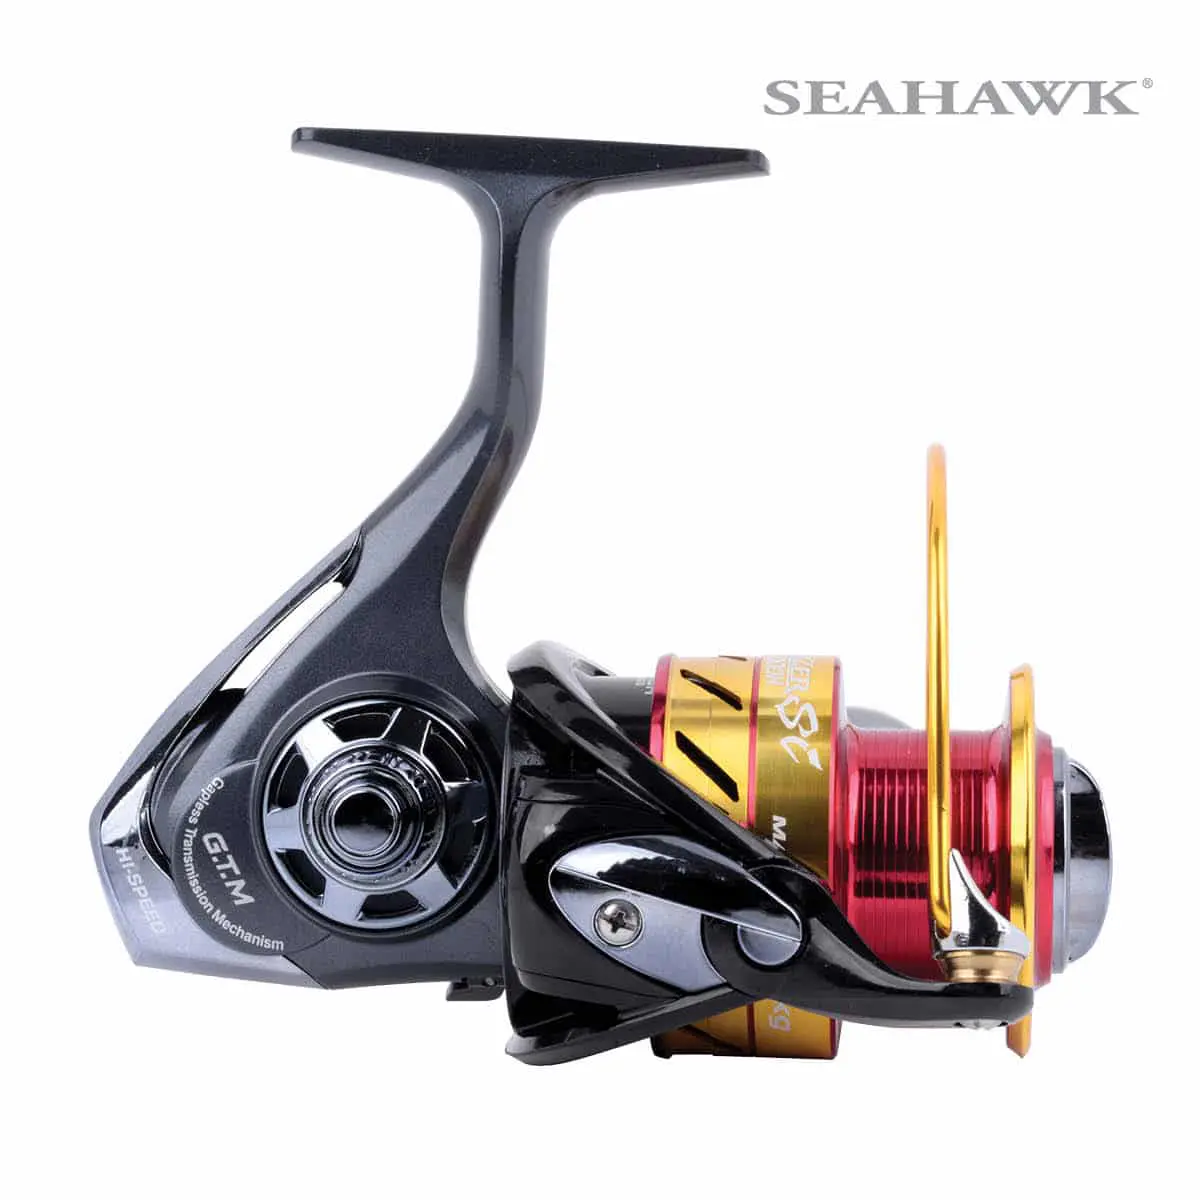 Seahawk Air Cruizer SI  High Speed Spinning Reel